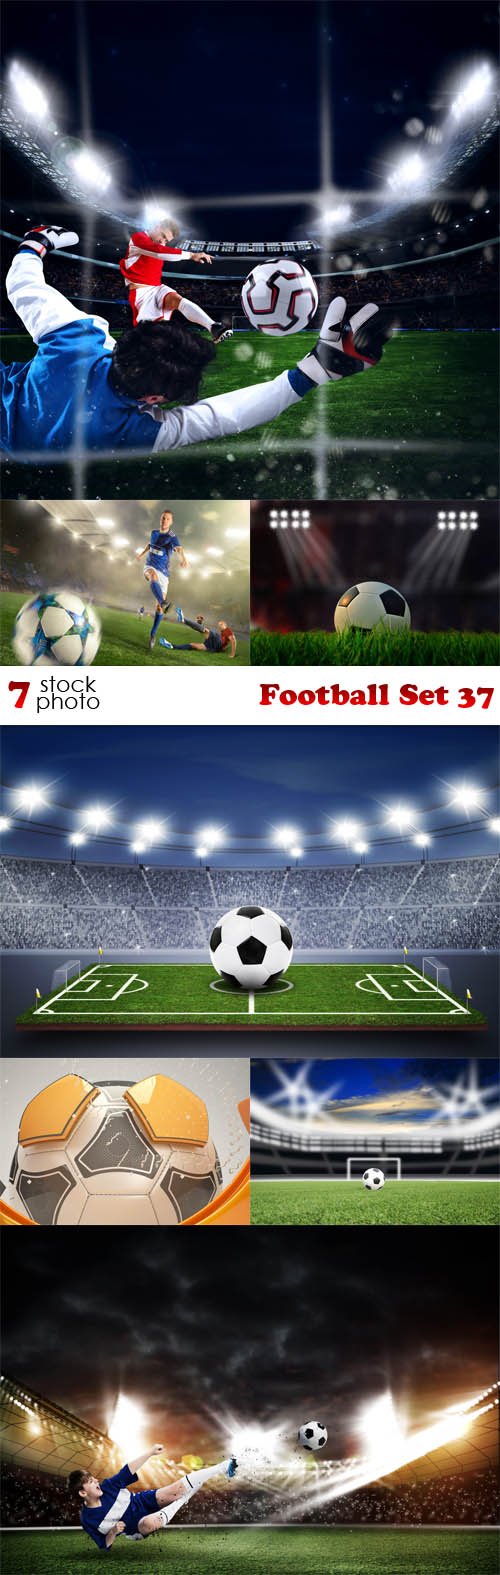 Photos - Football Set 37